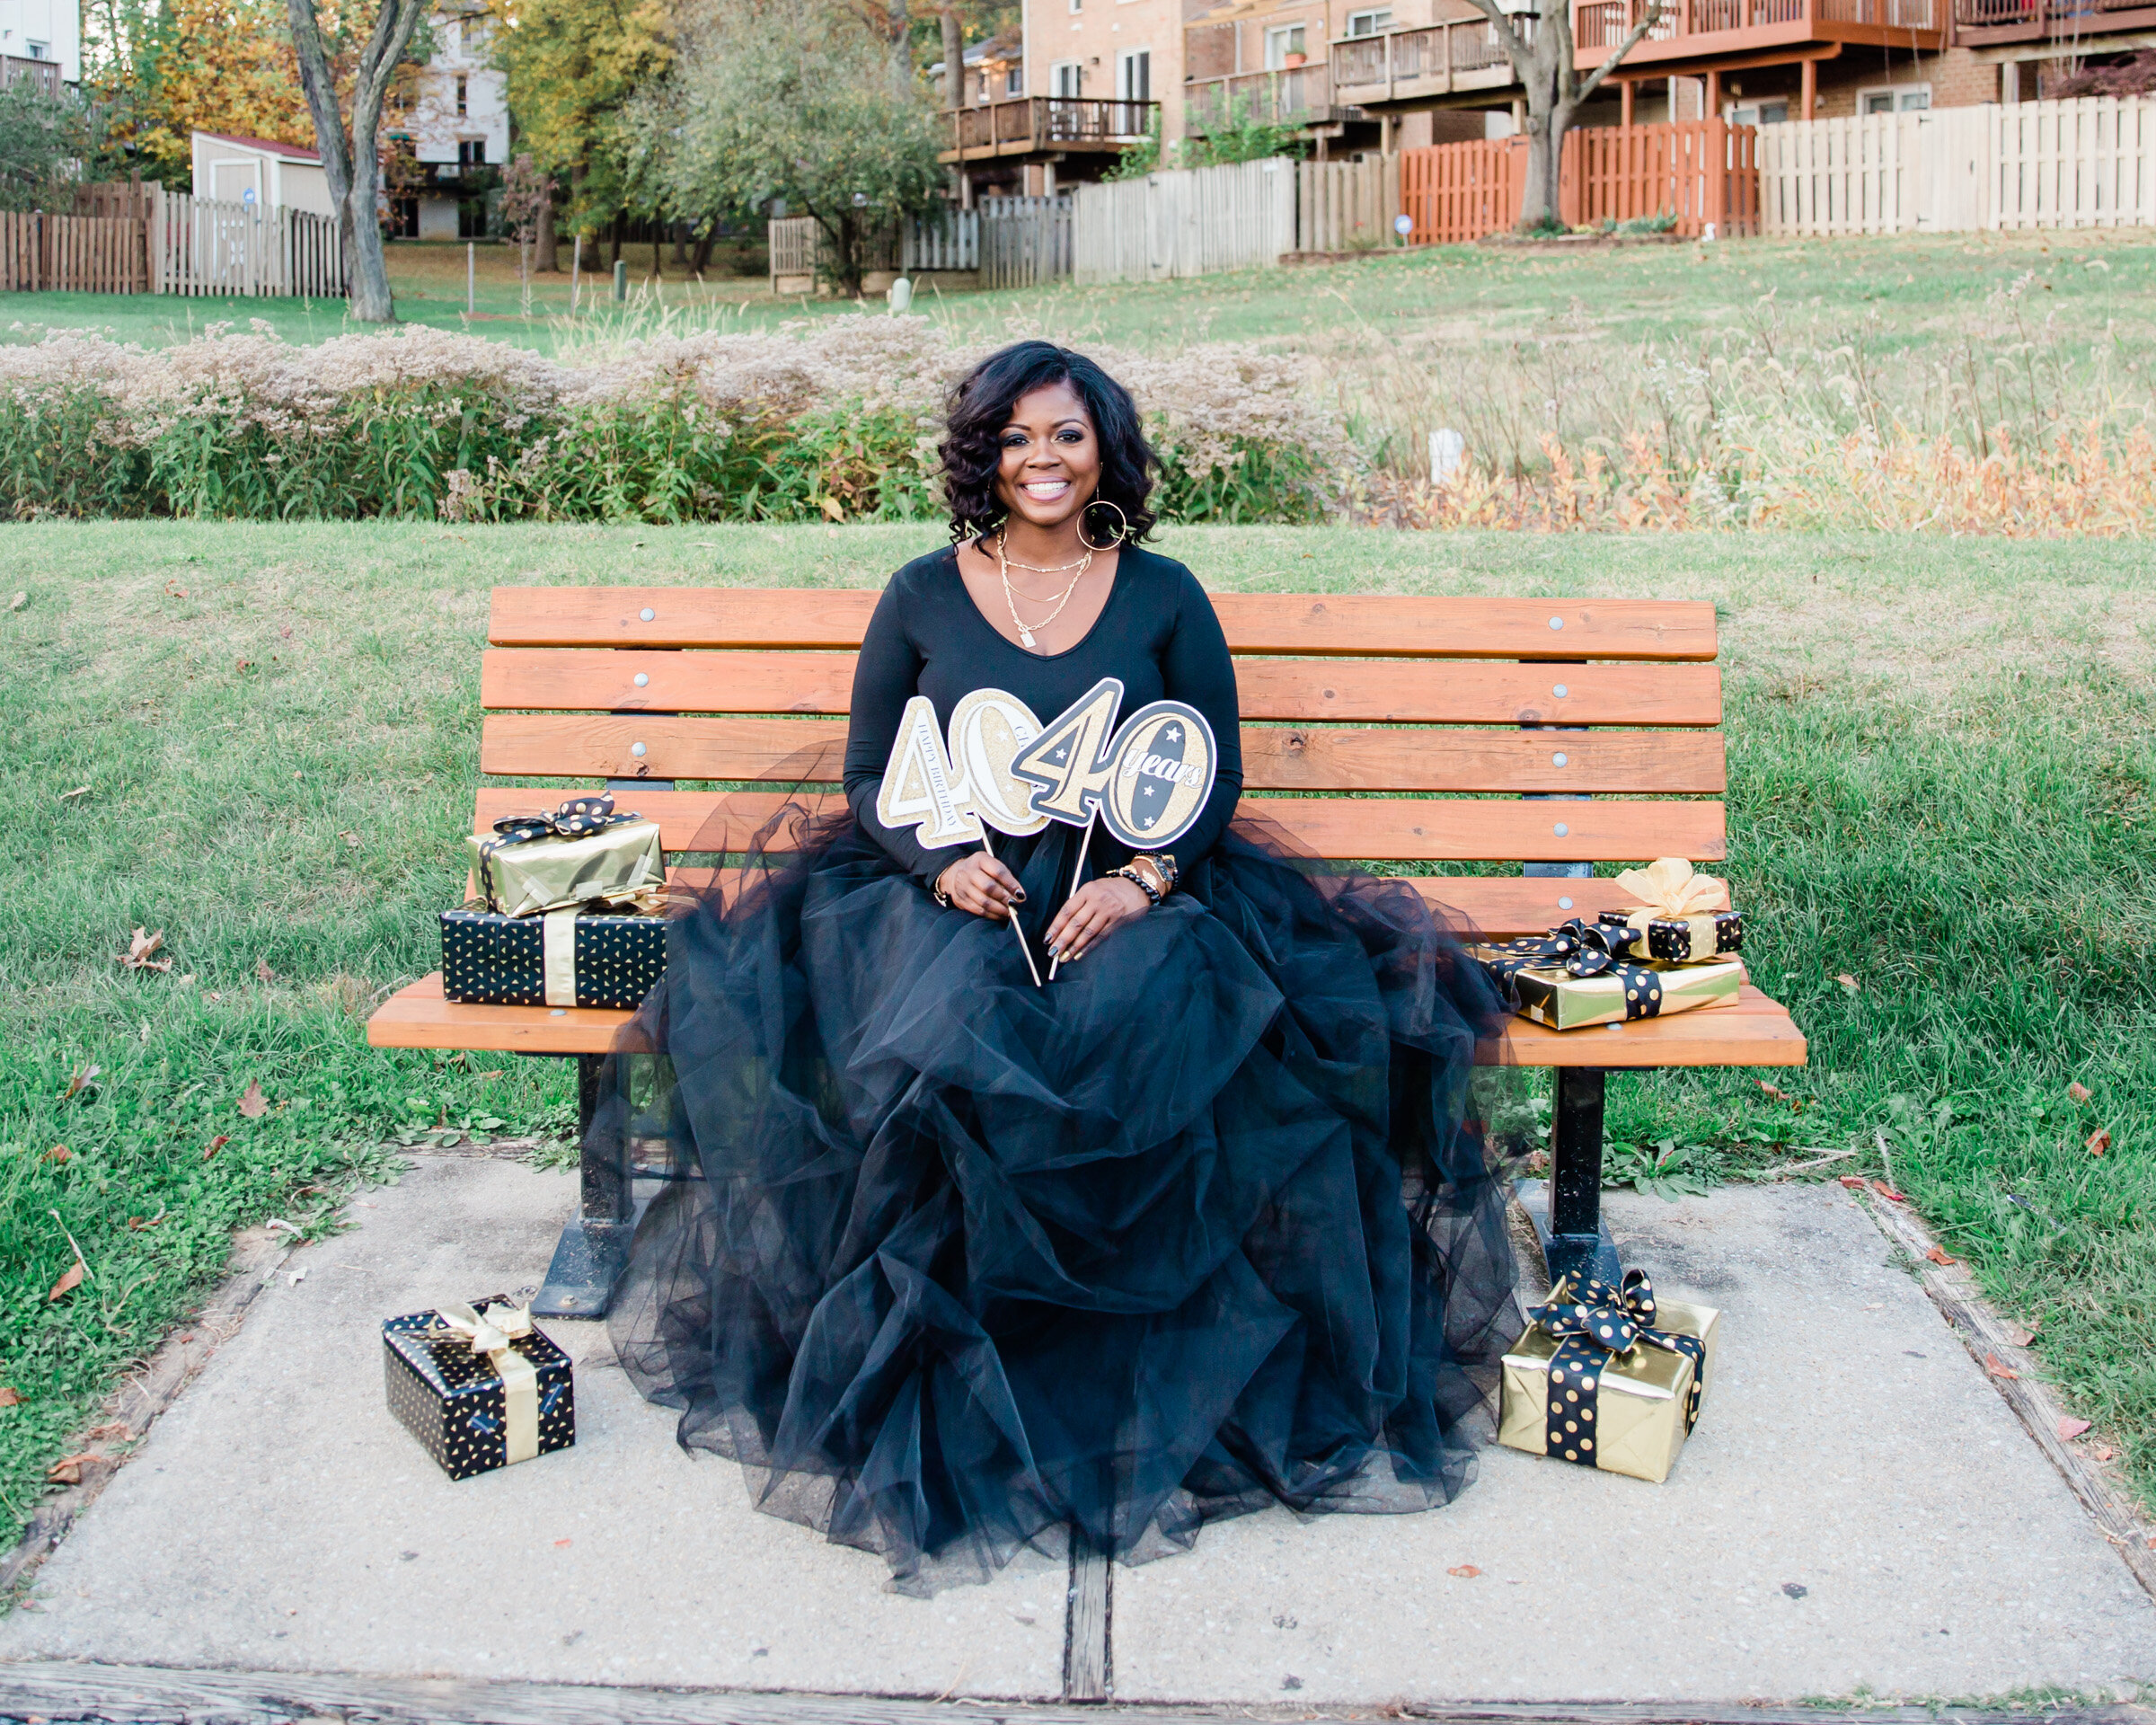 Black Female Portrait Photographer in Baltimore 40t Birthday Photoshoot by Megapixels Media Photography-50.jpg